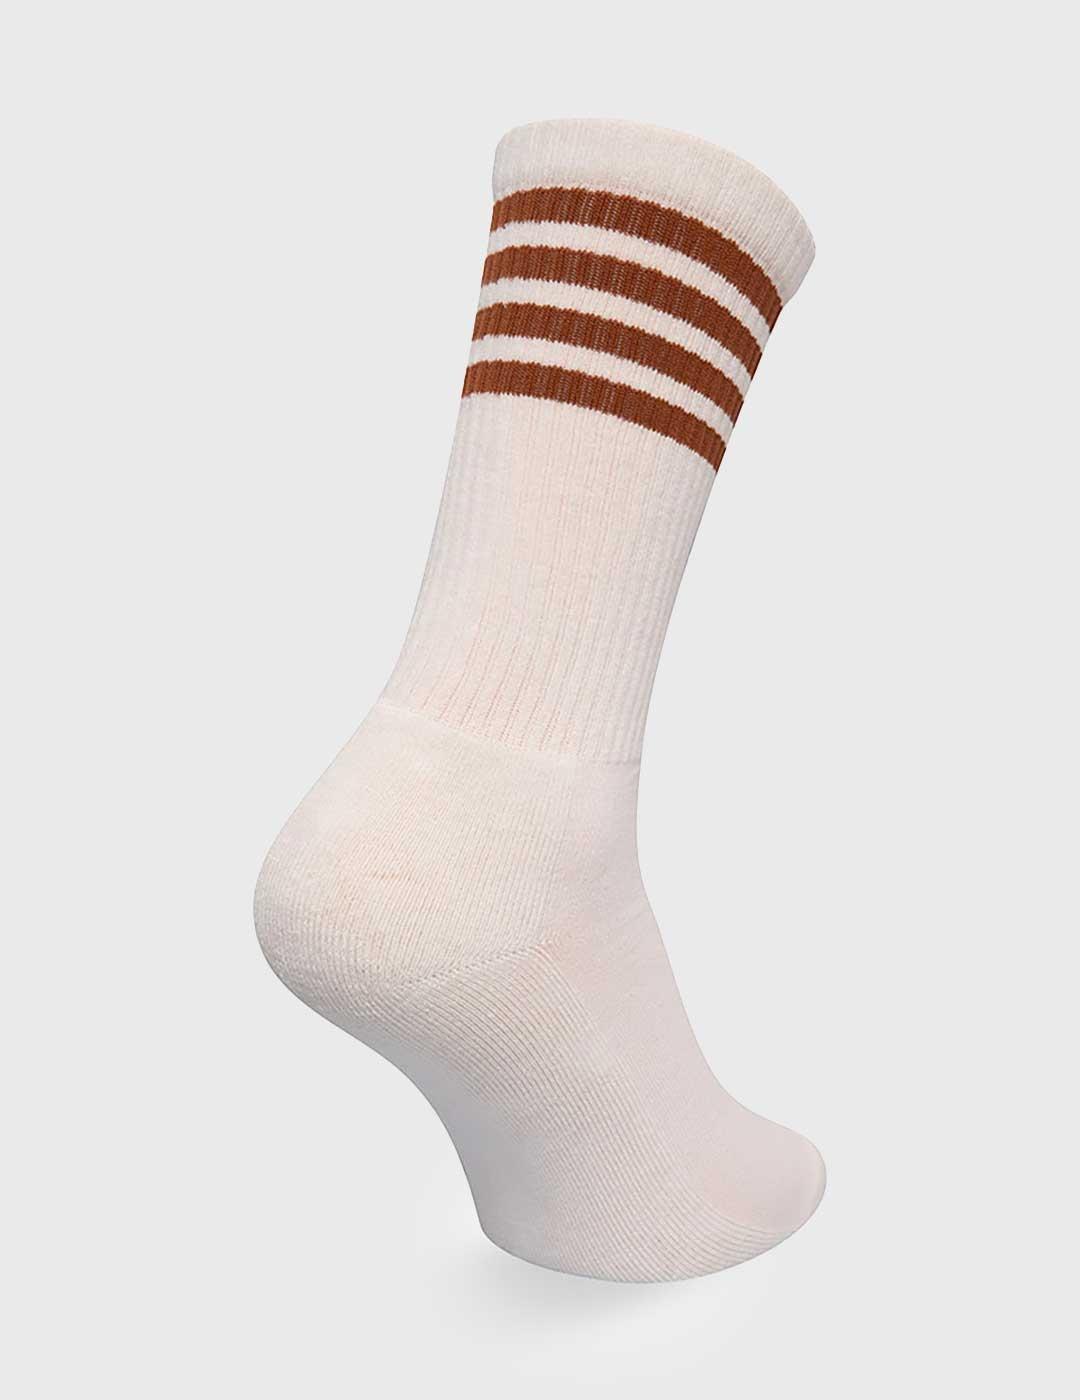 New Era Stripe Crew Socks Pack 3 Calcetines blancos con raya